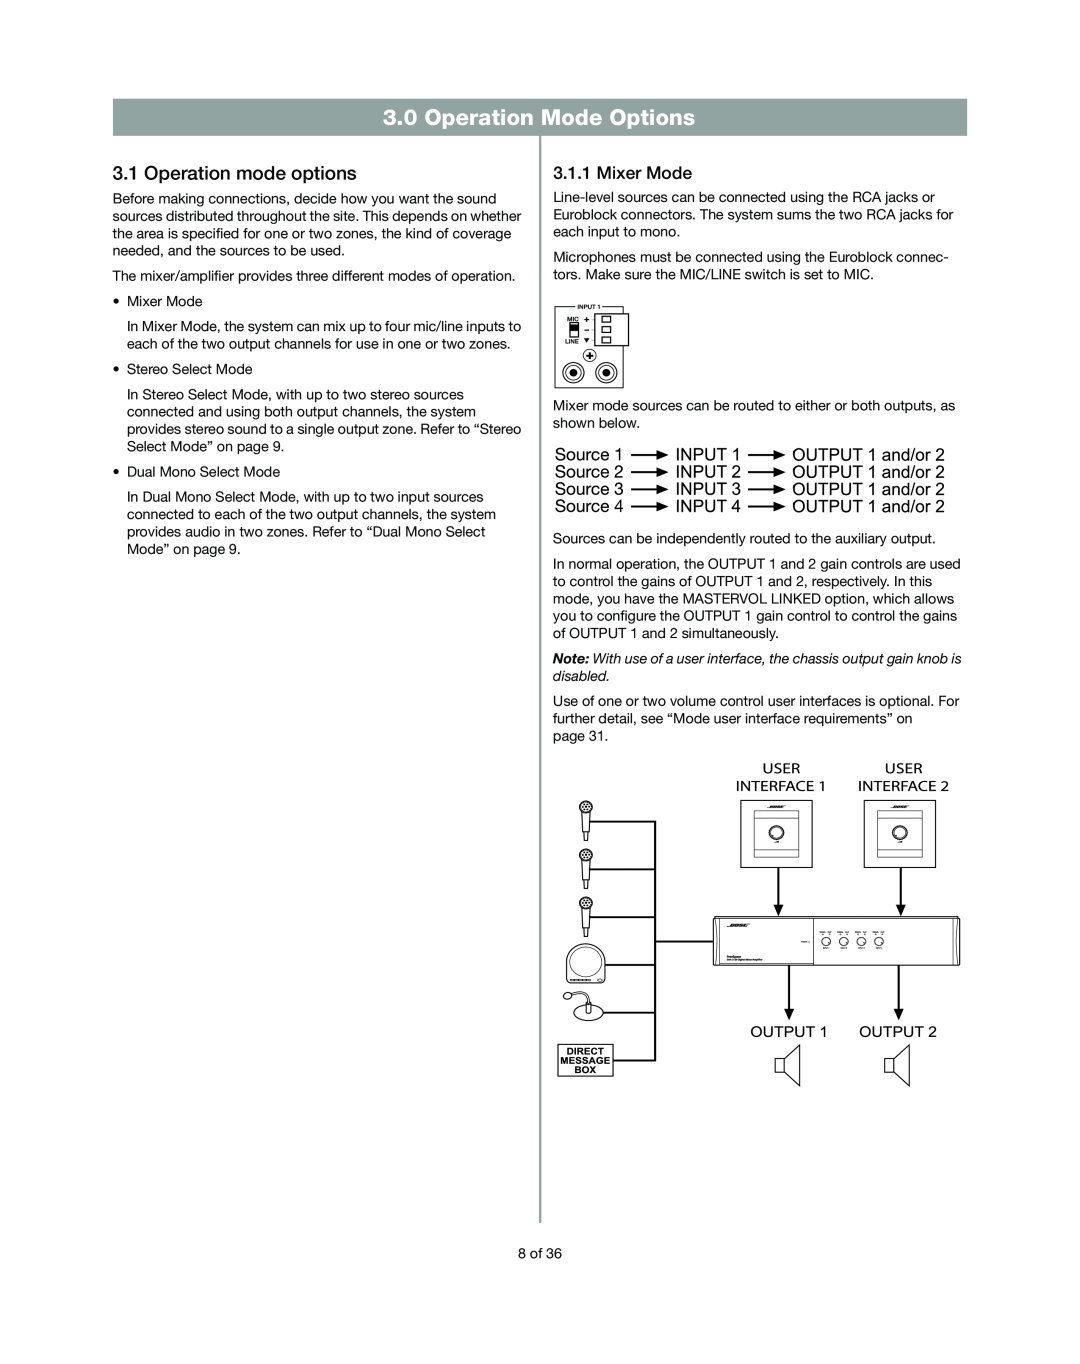 Bose DXA2120 manual Operation Mode Options, Operation mode options, Mixer Mode 